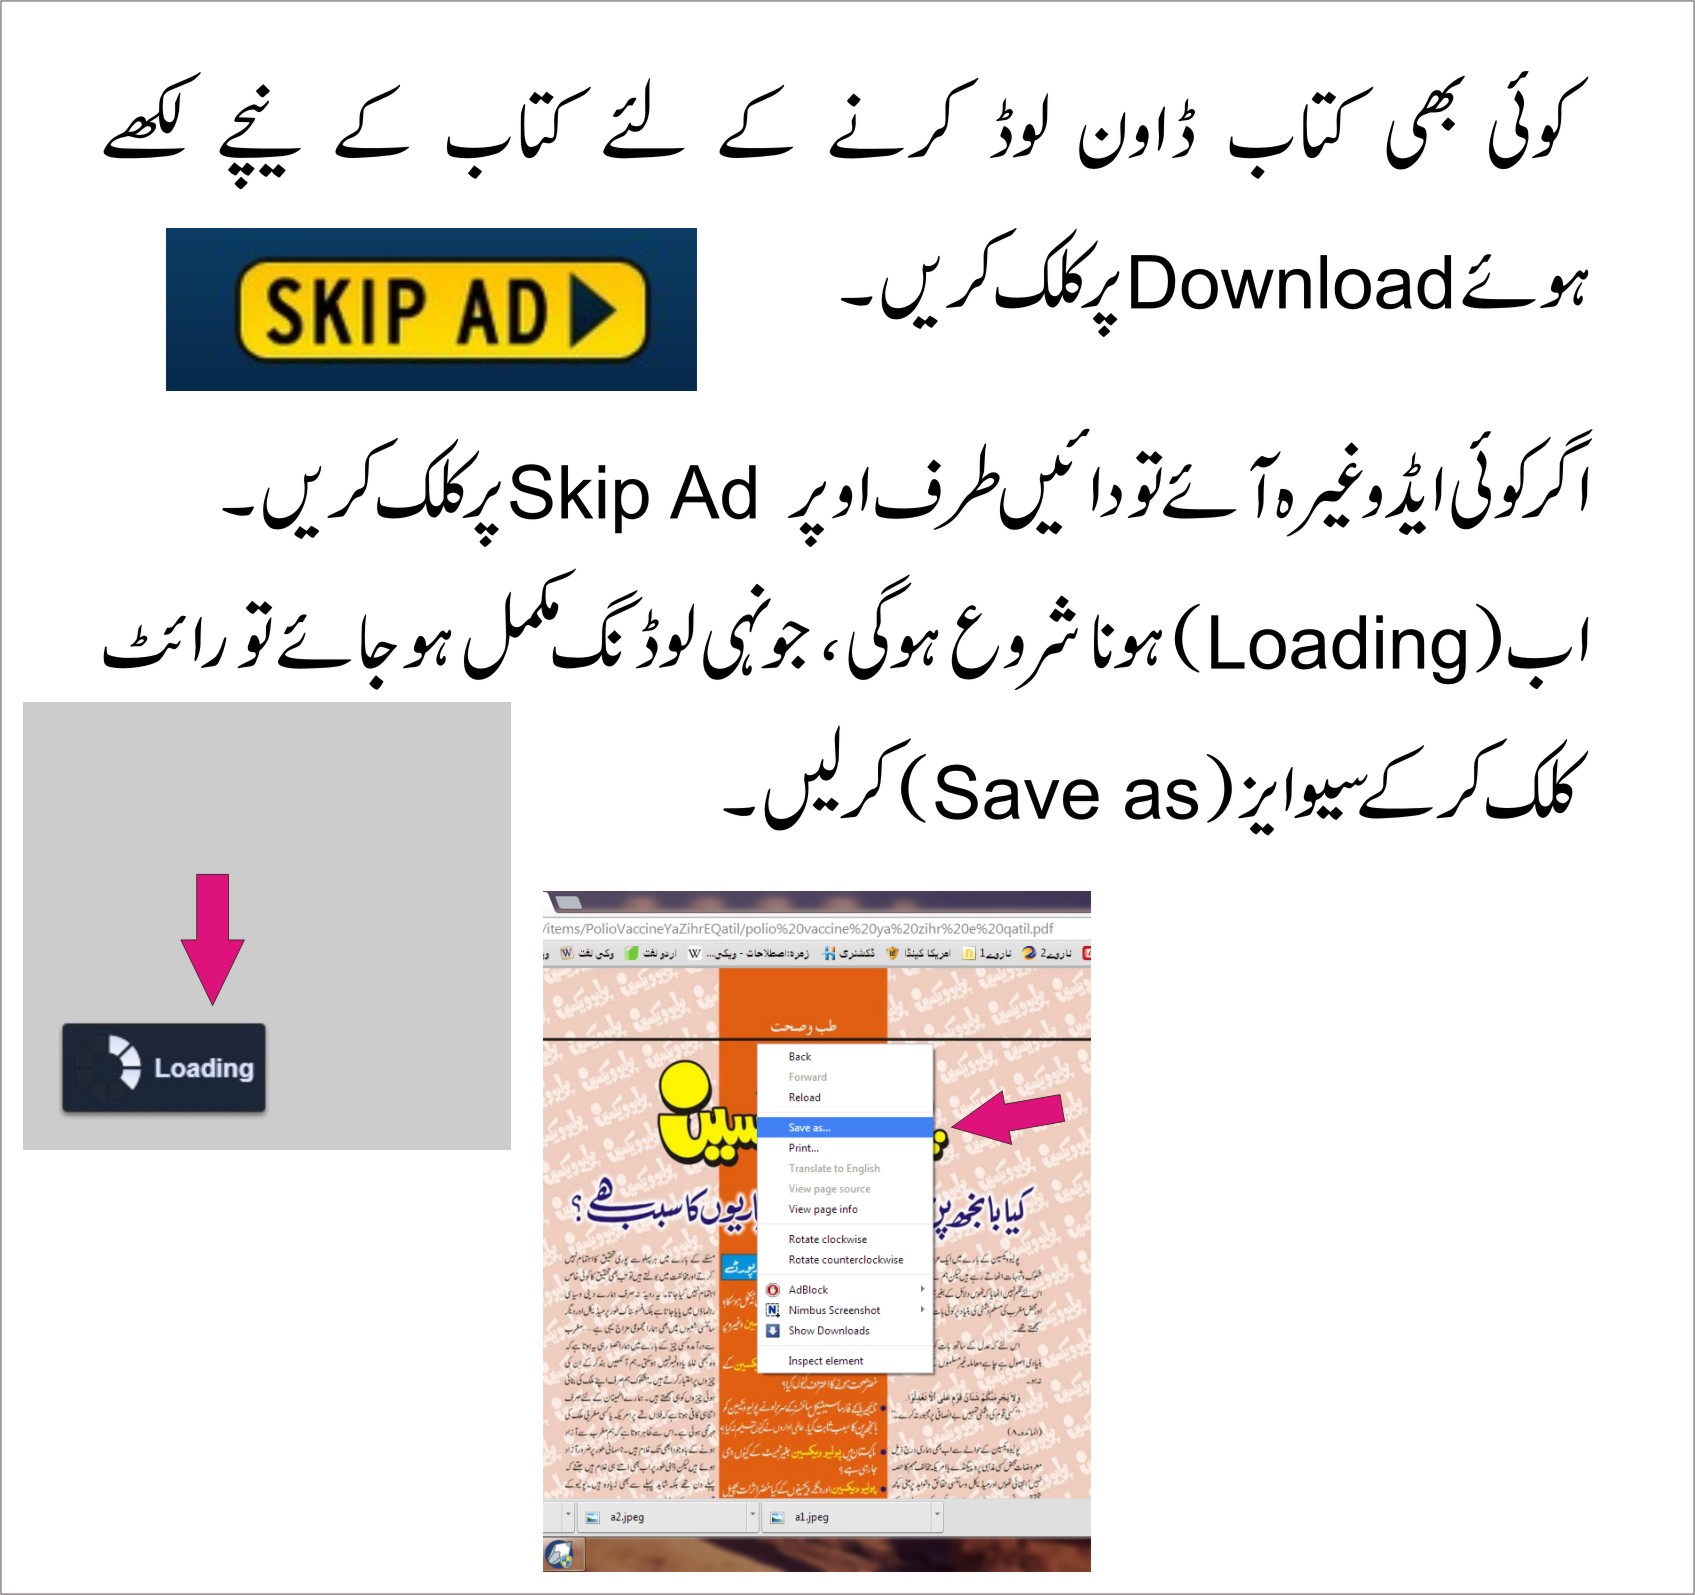 Free Urdu Islamic Books Pdf Format